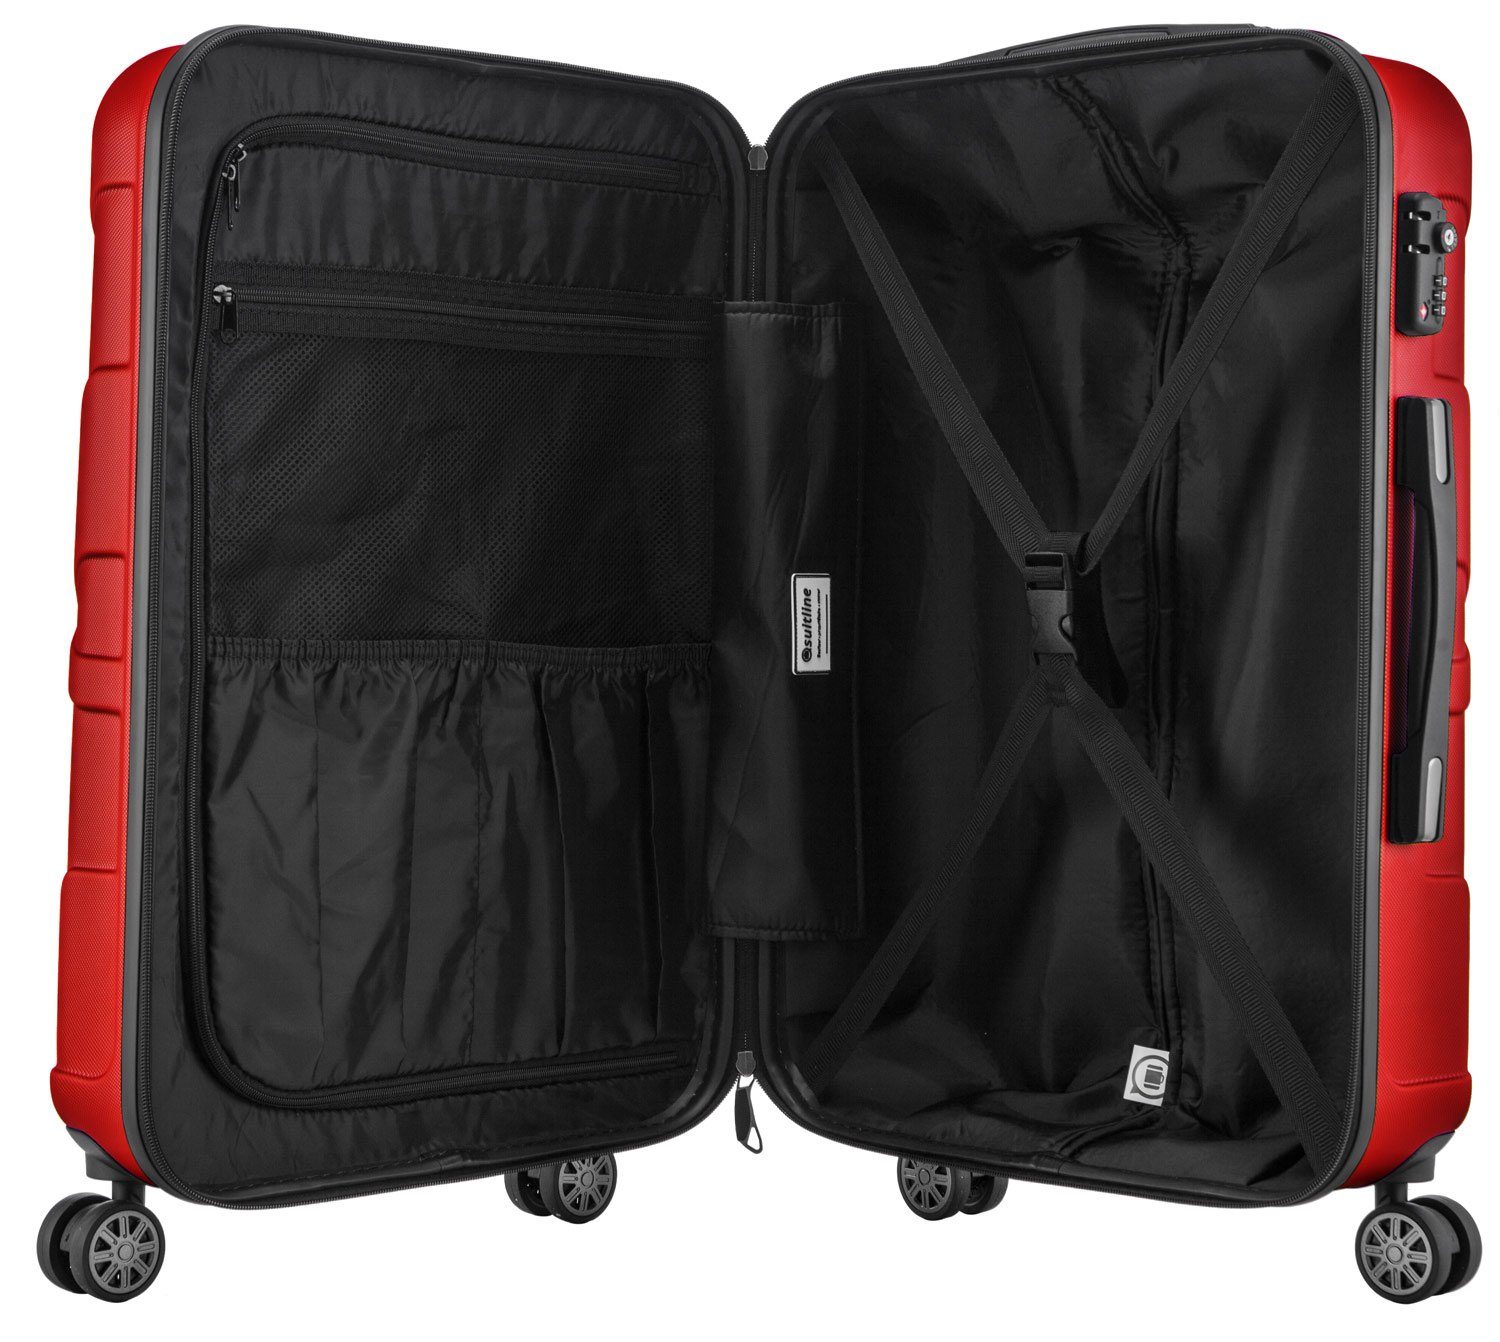 cm, 65 ca. S1, Liter - TSA, Leicht, Packvolumen Koffer Suitline Robust, Rot Rollen, 68 4 Erweiterbar, 58